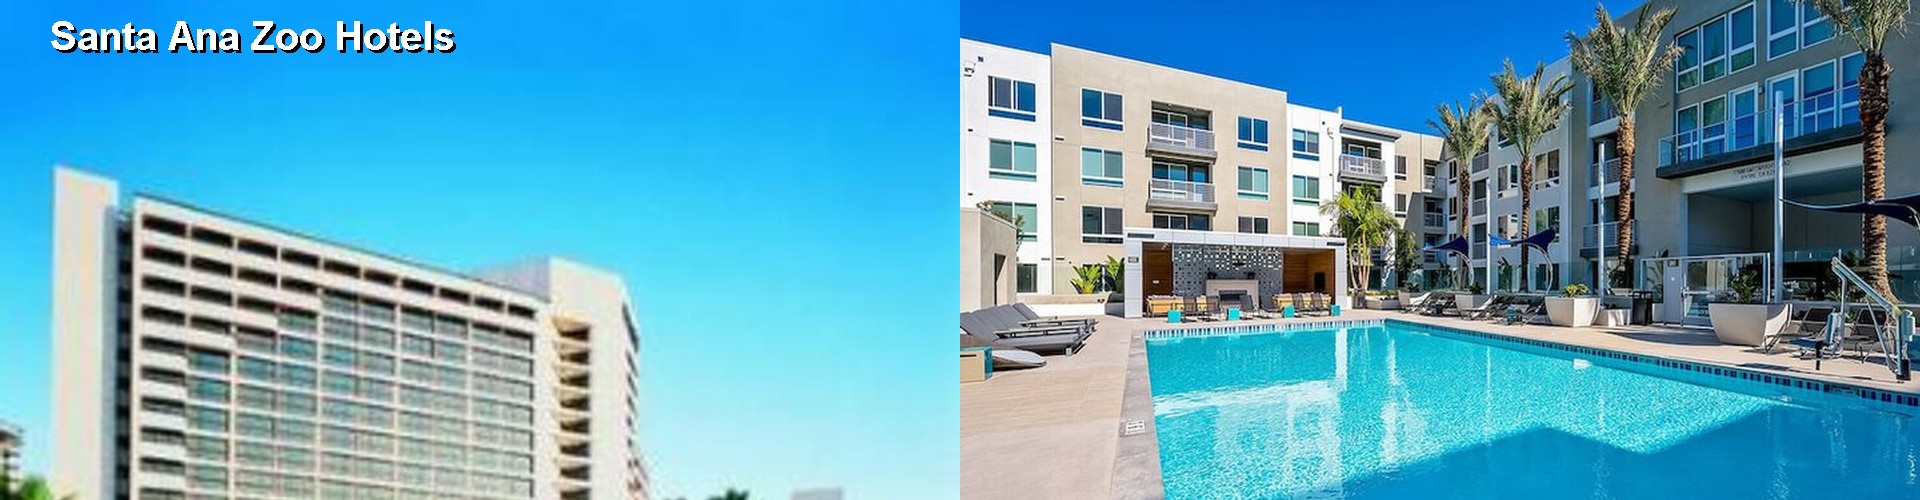 4 Best Hotels near Santa Ana Zoo